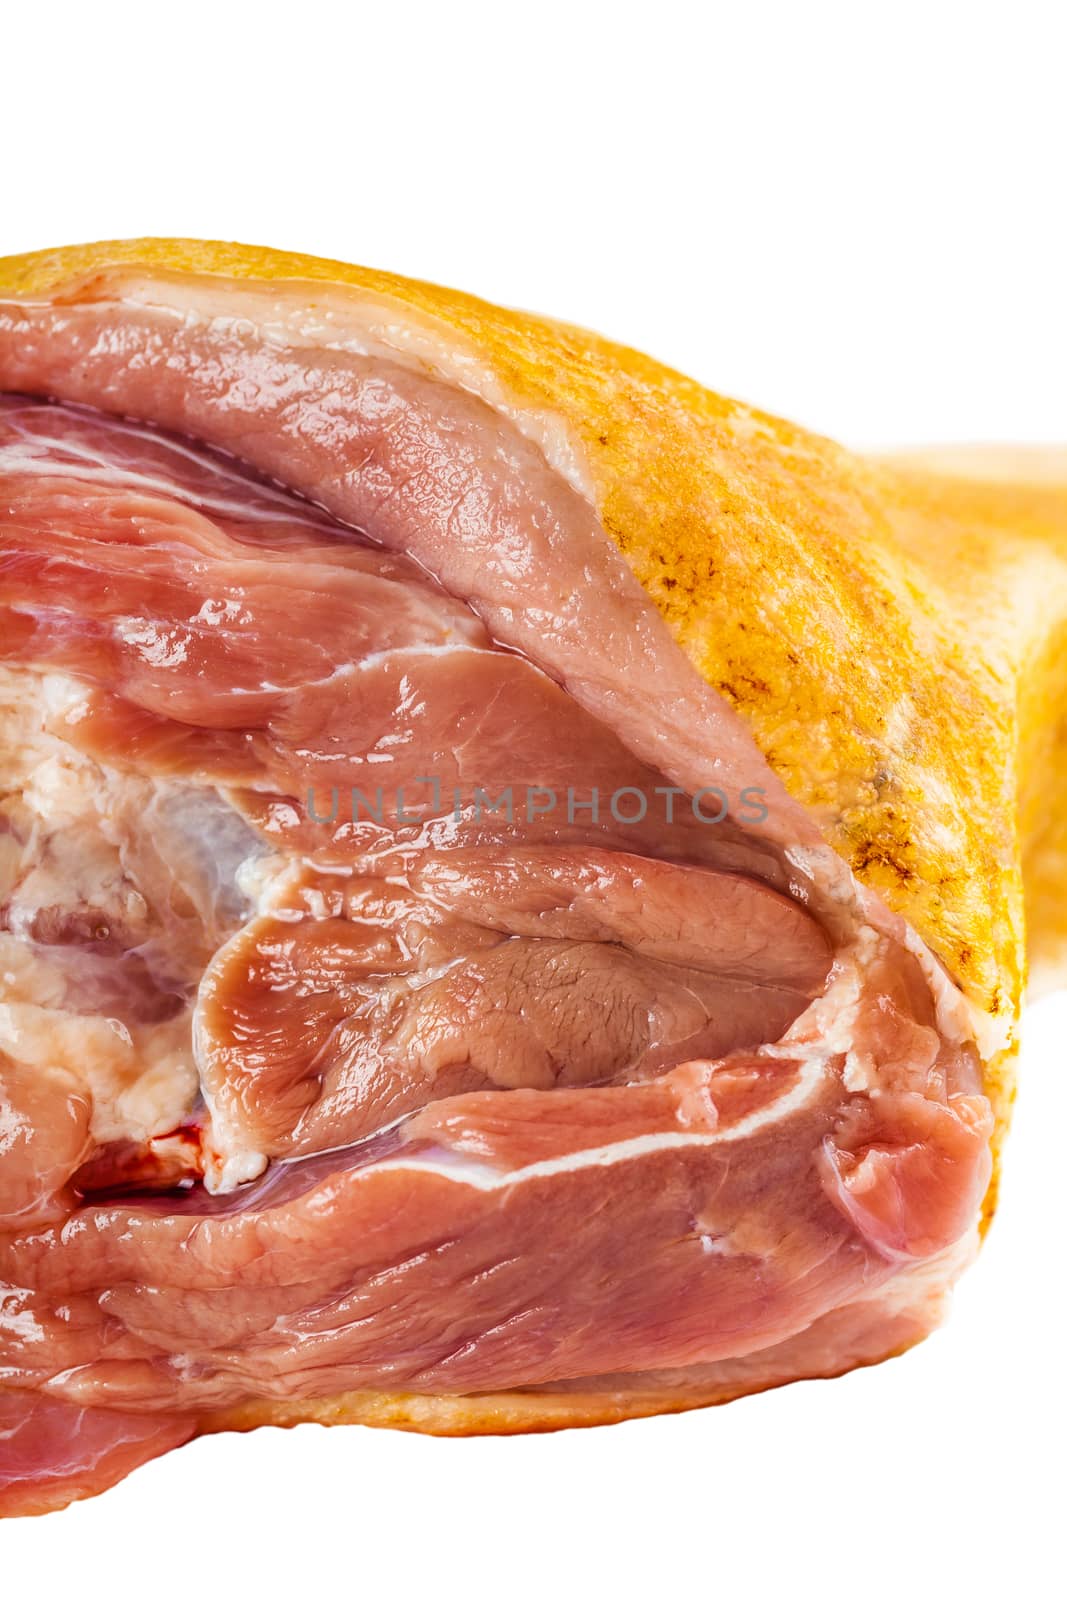 raw pork shank close-up, white background